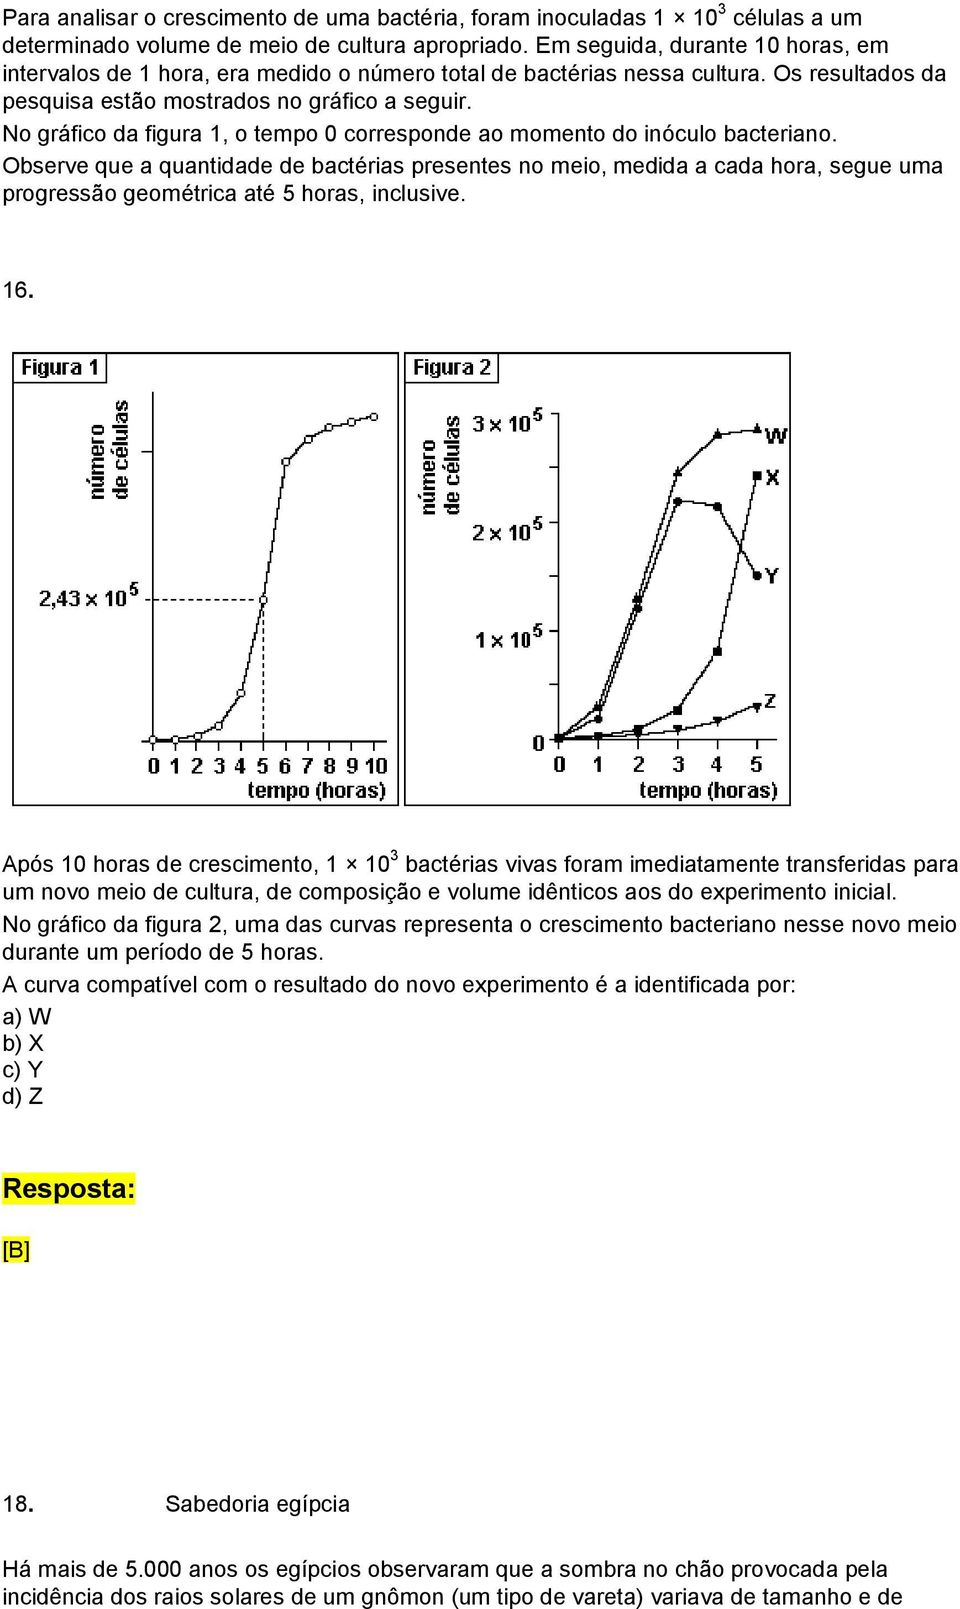 No gráfico da figura 1, o tempo 0 corresponde ao momento do inóculo bacteriano.